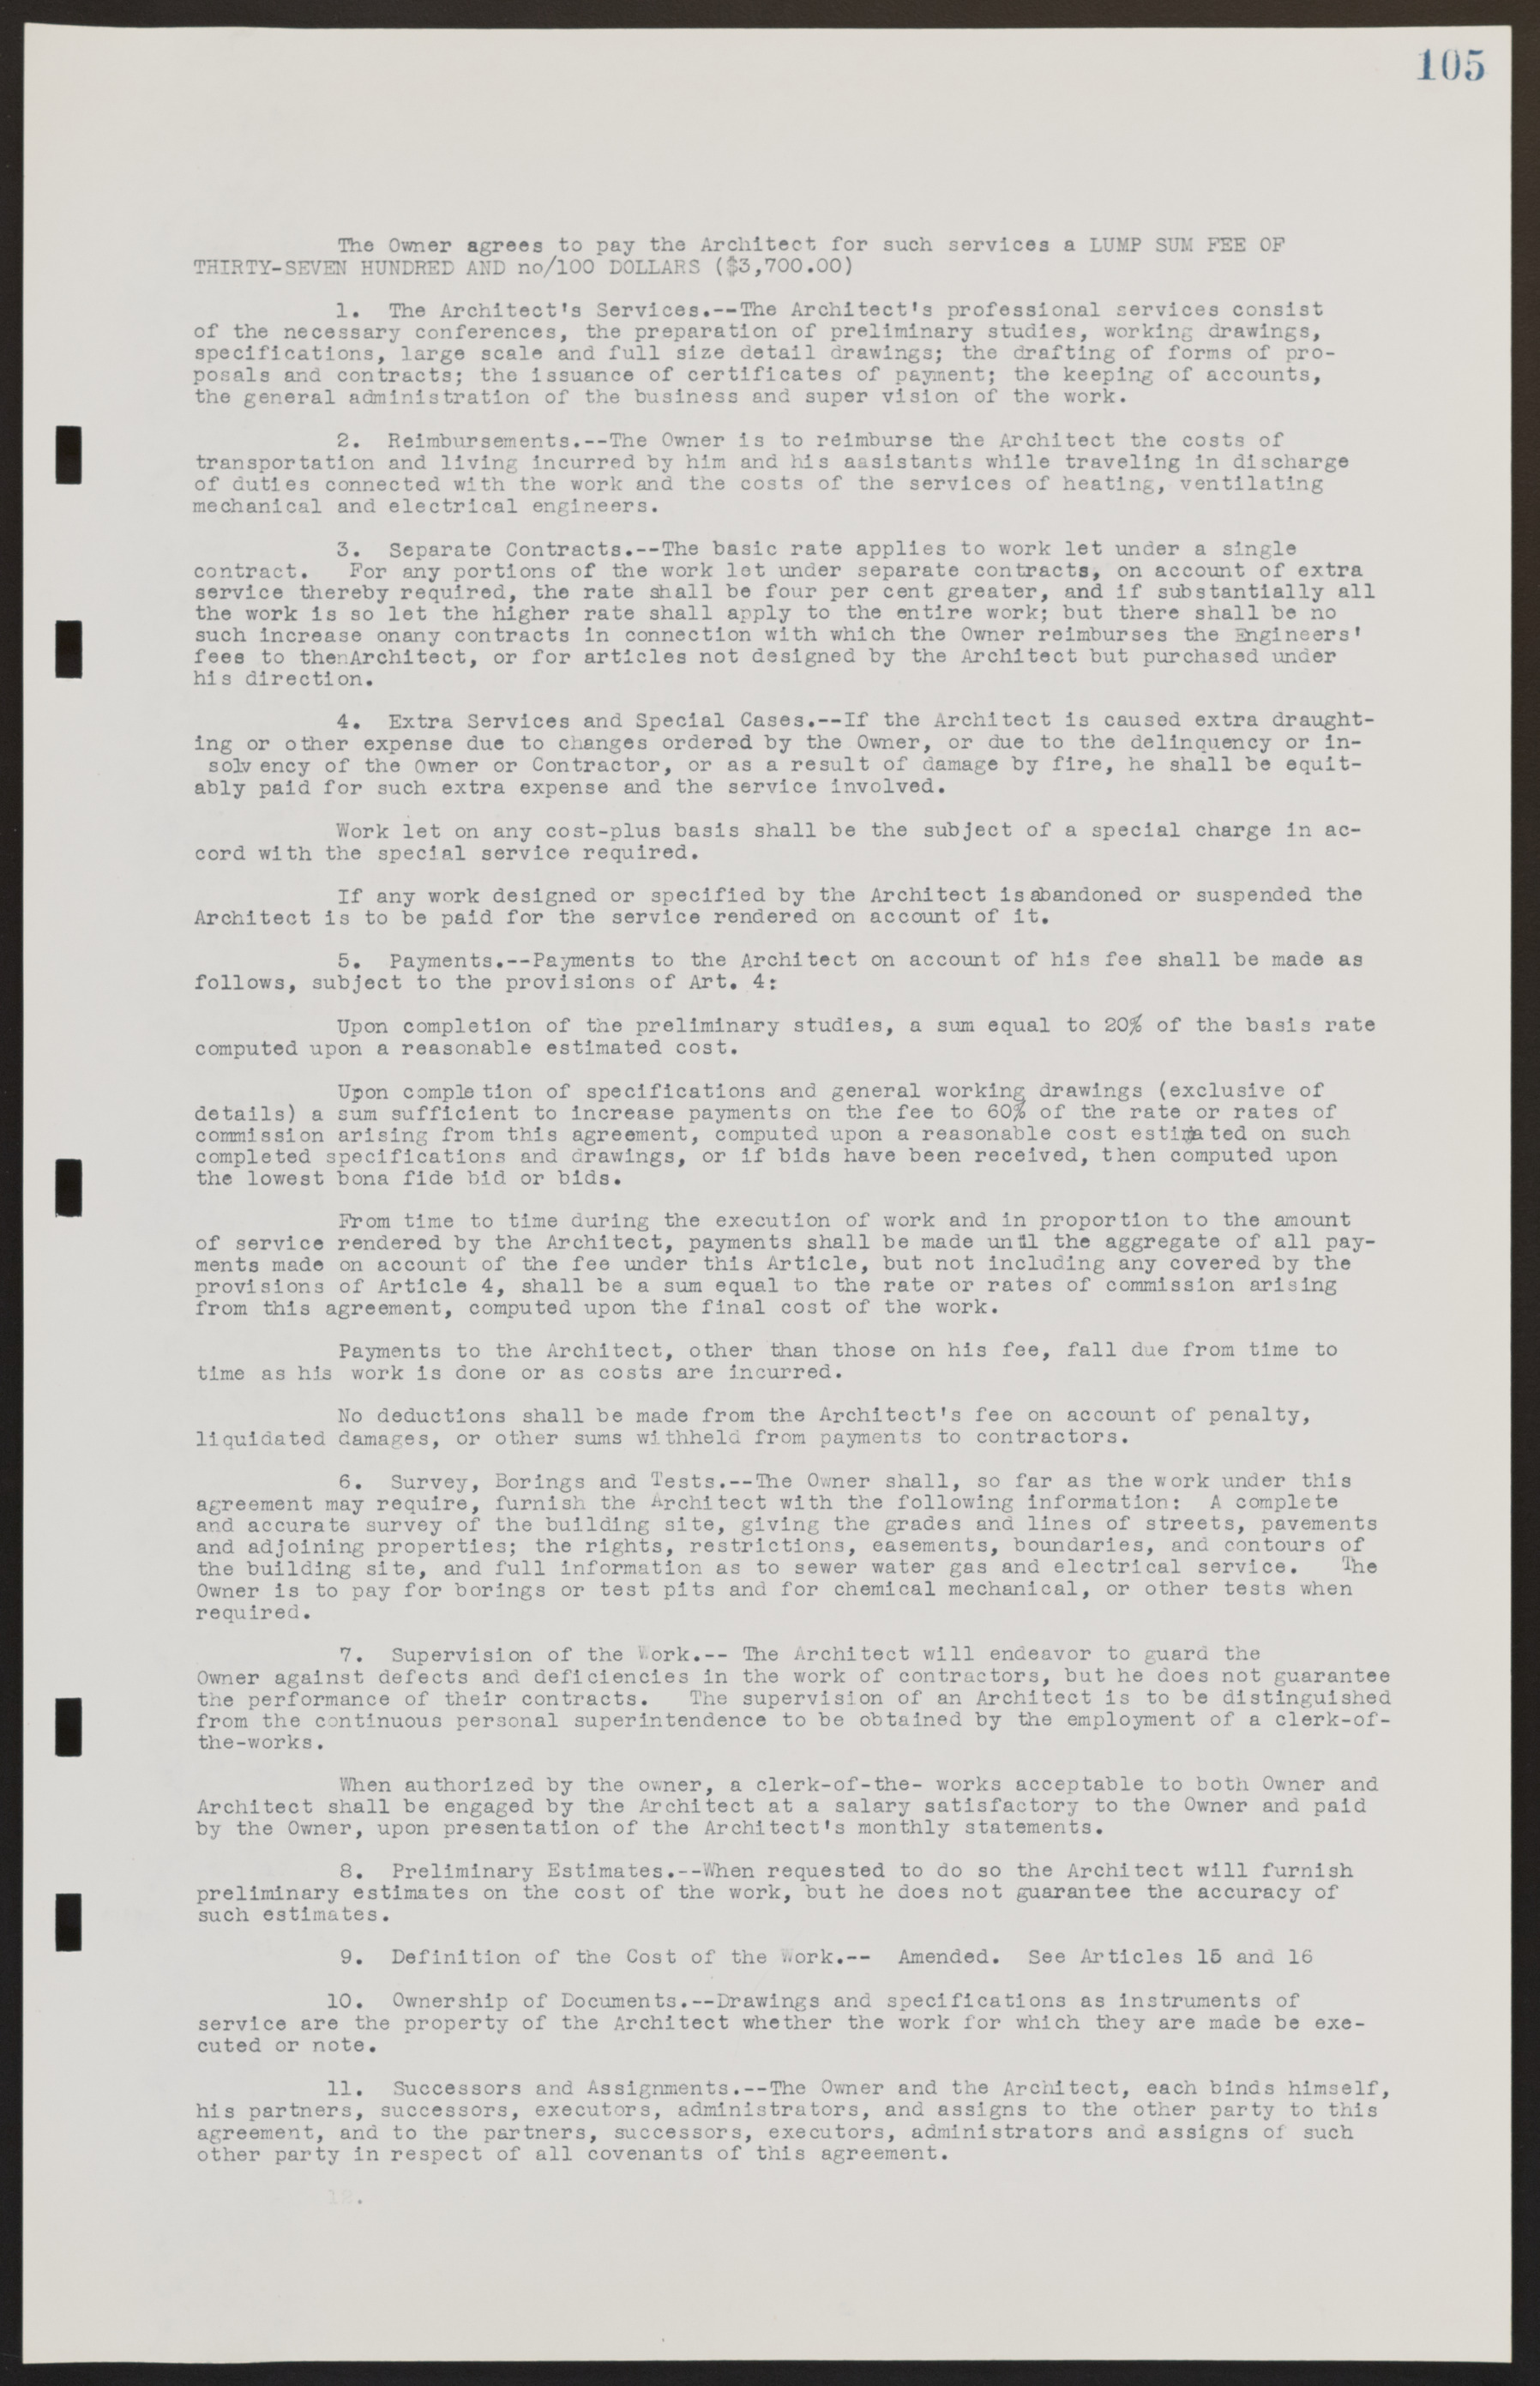 Las Vegas City Commission Legal Documents, February 29, 1944 to February 21, 1945, lvc000016-35